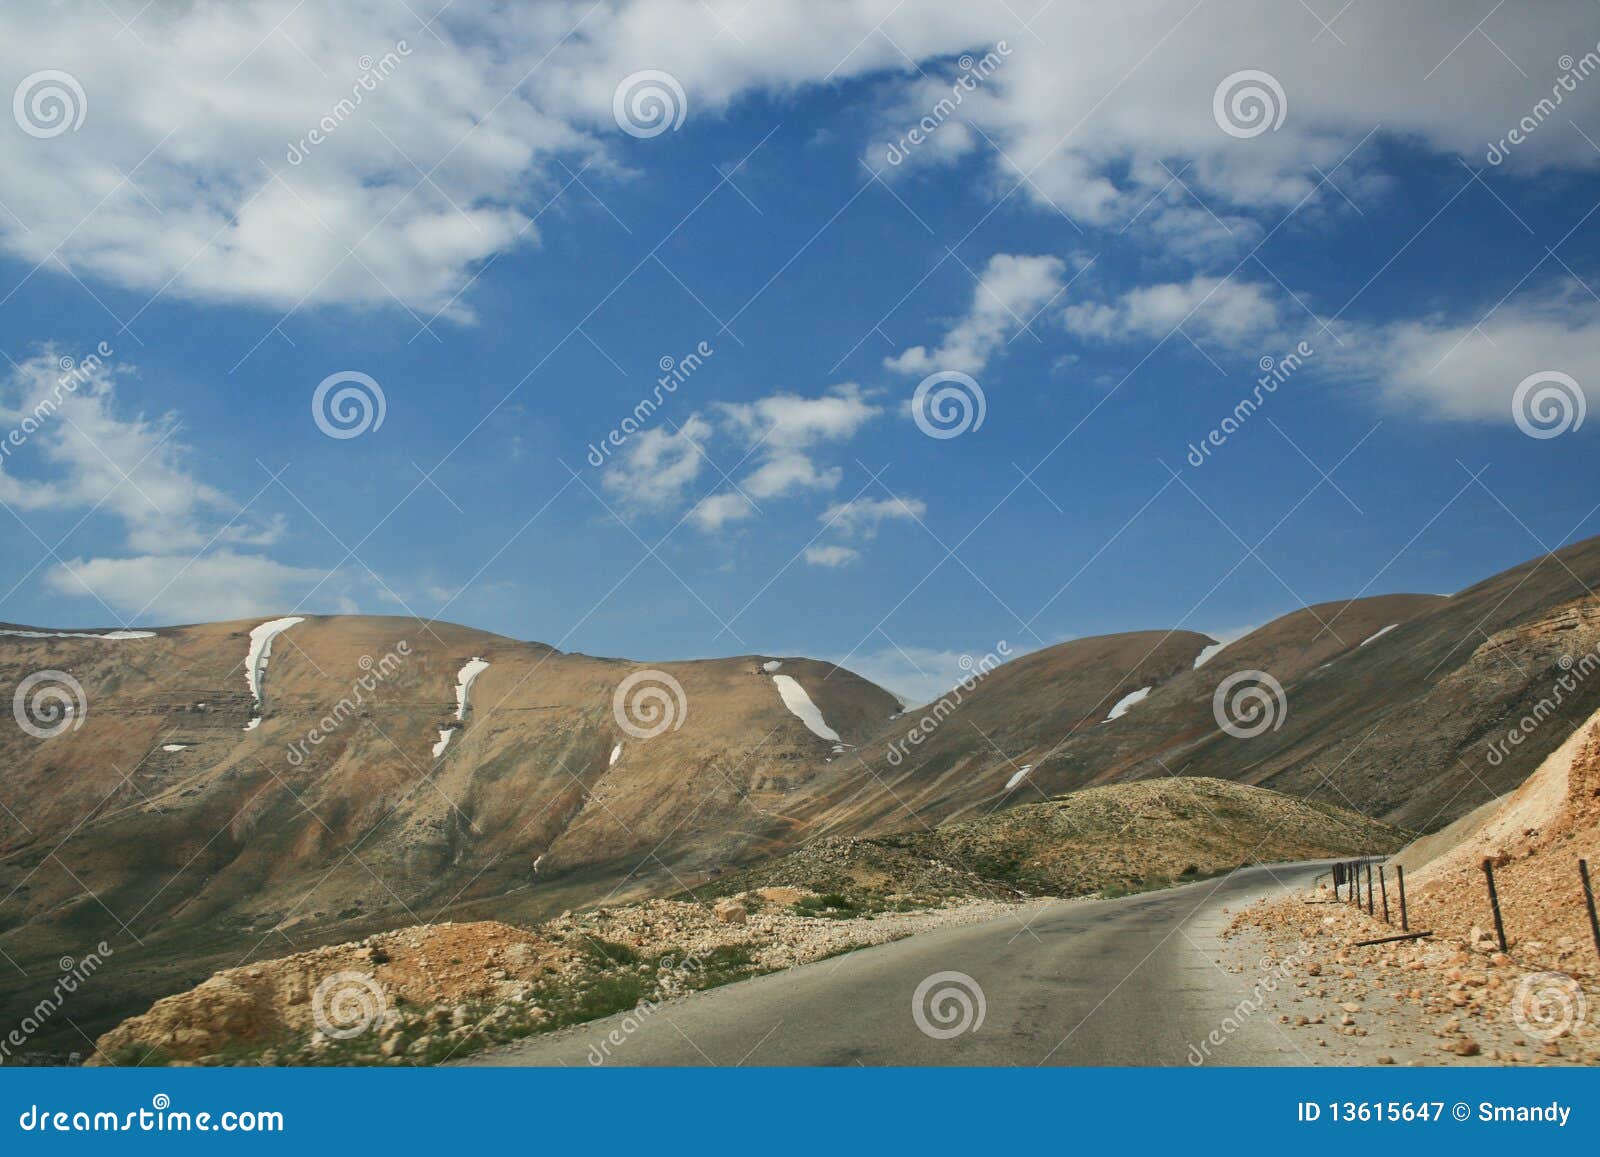 mountain road on the highest peak of lebanon